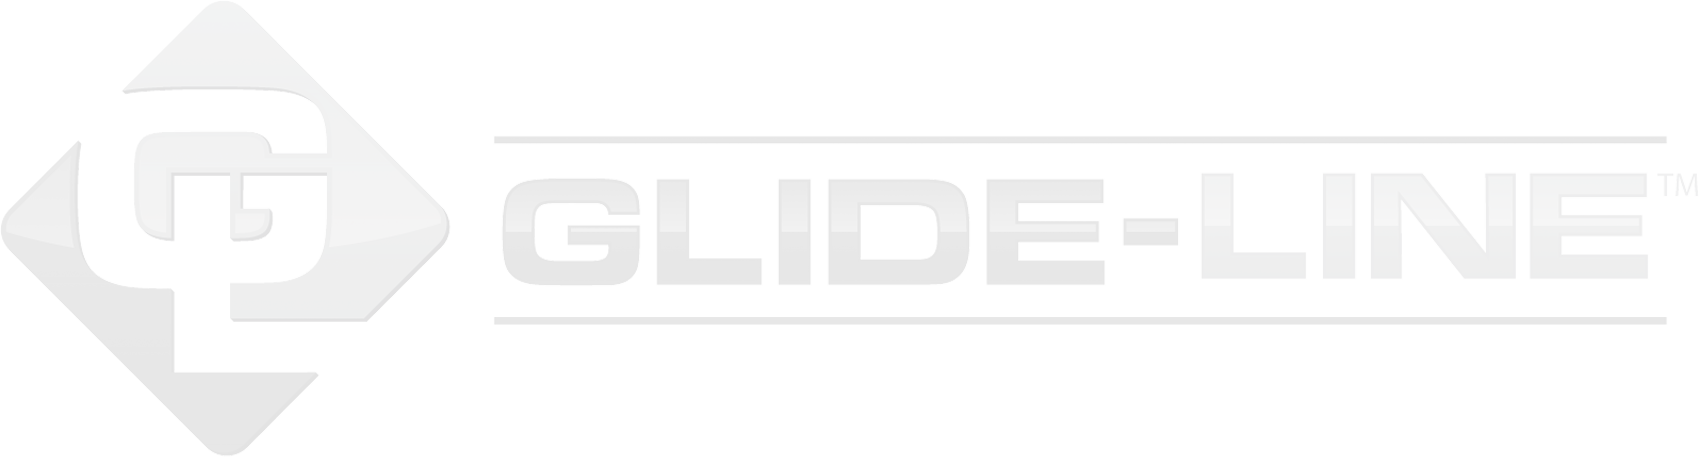 Glide-Line - New Logo - White